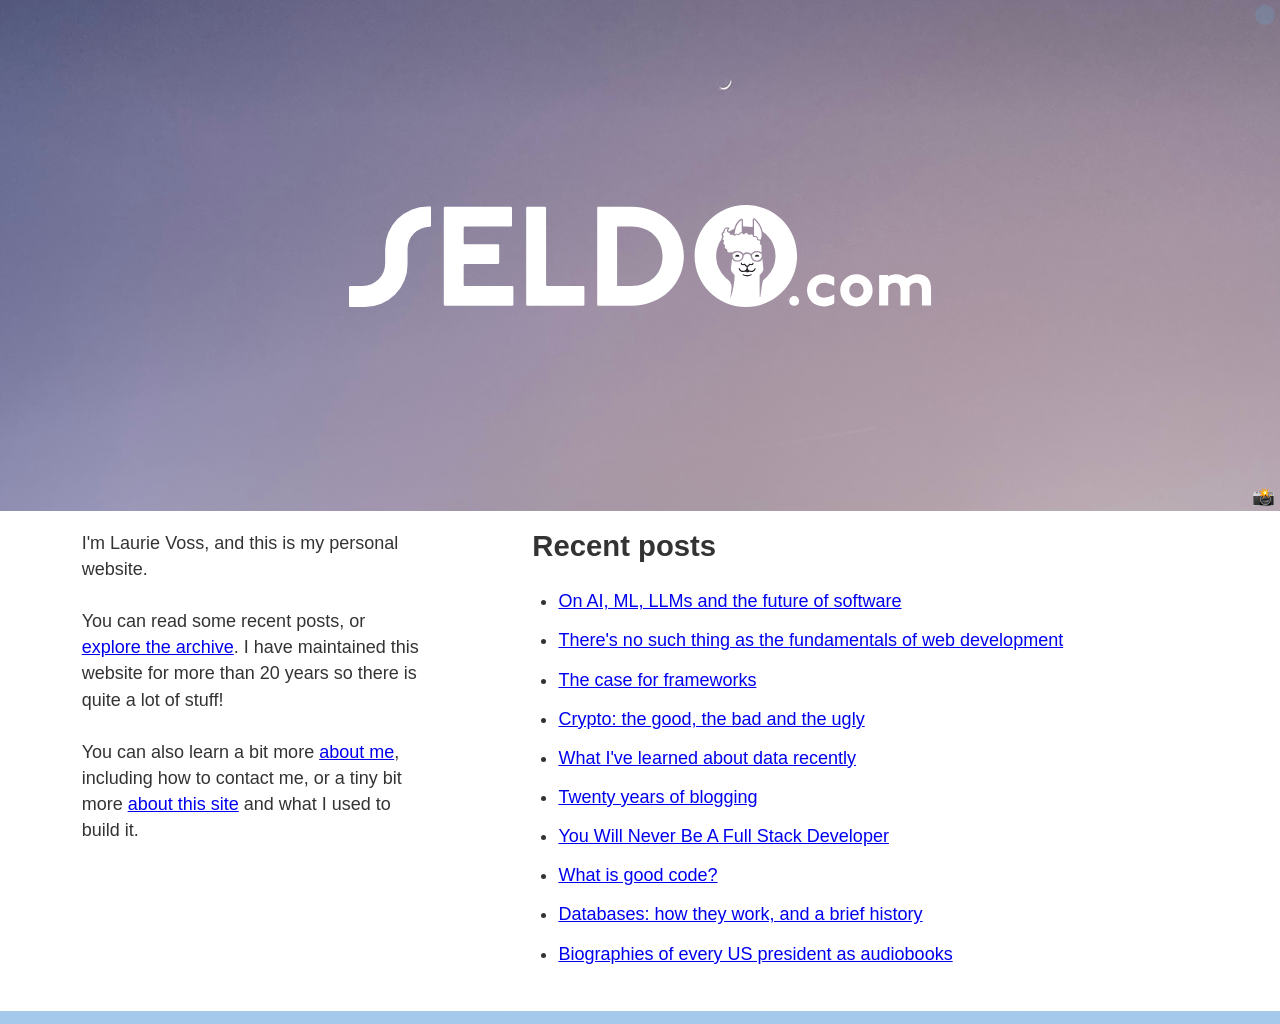 seldo.com